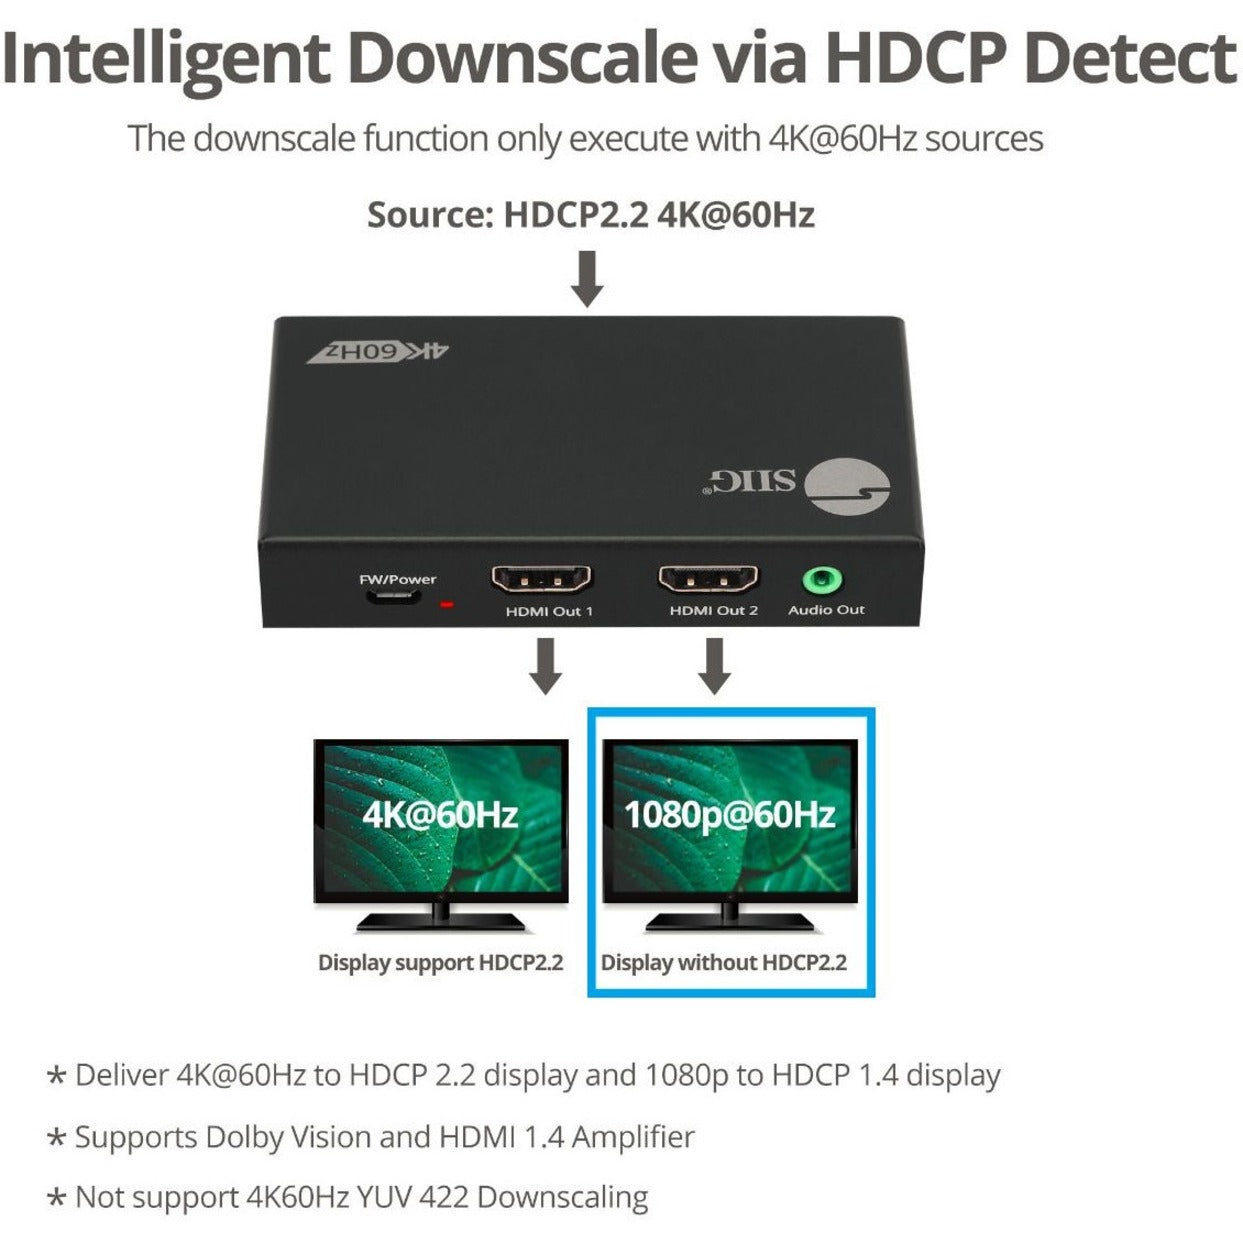 SIIG CE-H26D11-S1 2-Port HDMI 2.0 4K HDR Splitter / Switcher, Color Box